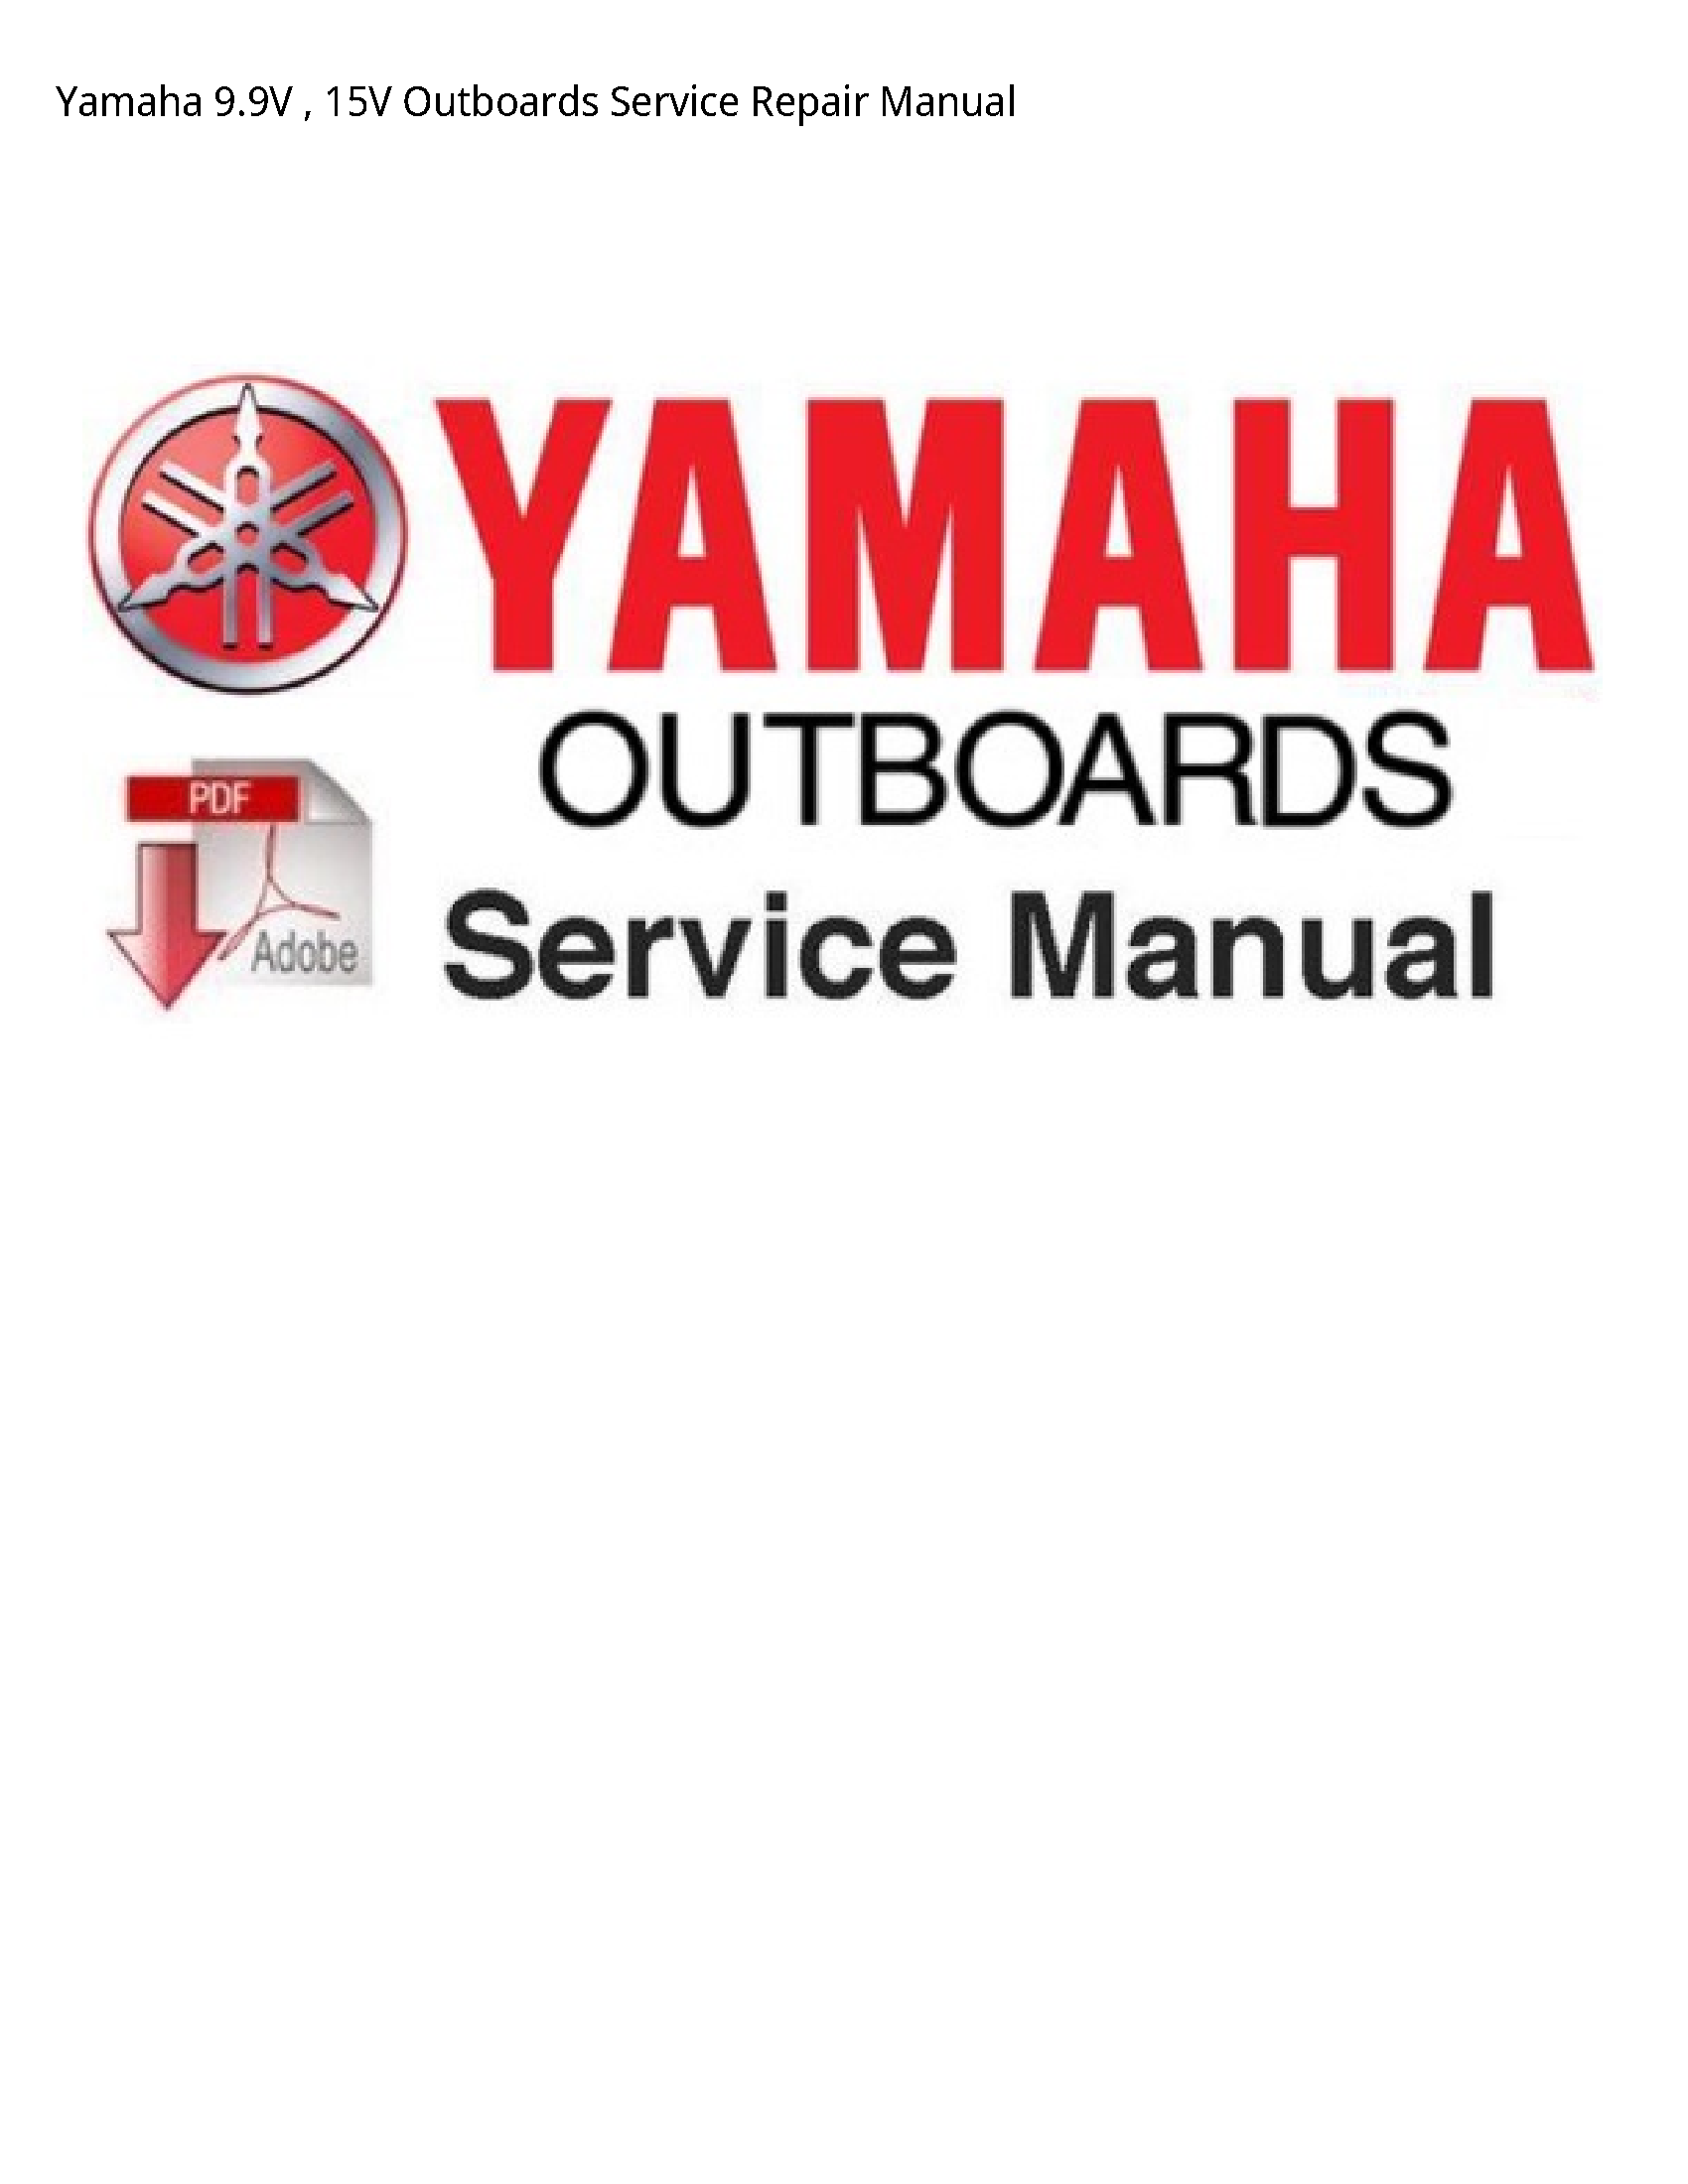 Yamaha 9.9V Outboards manual